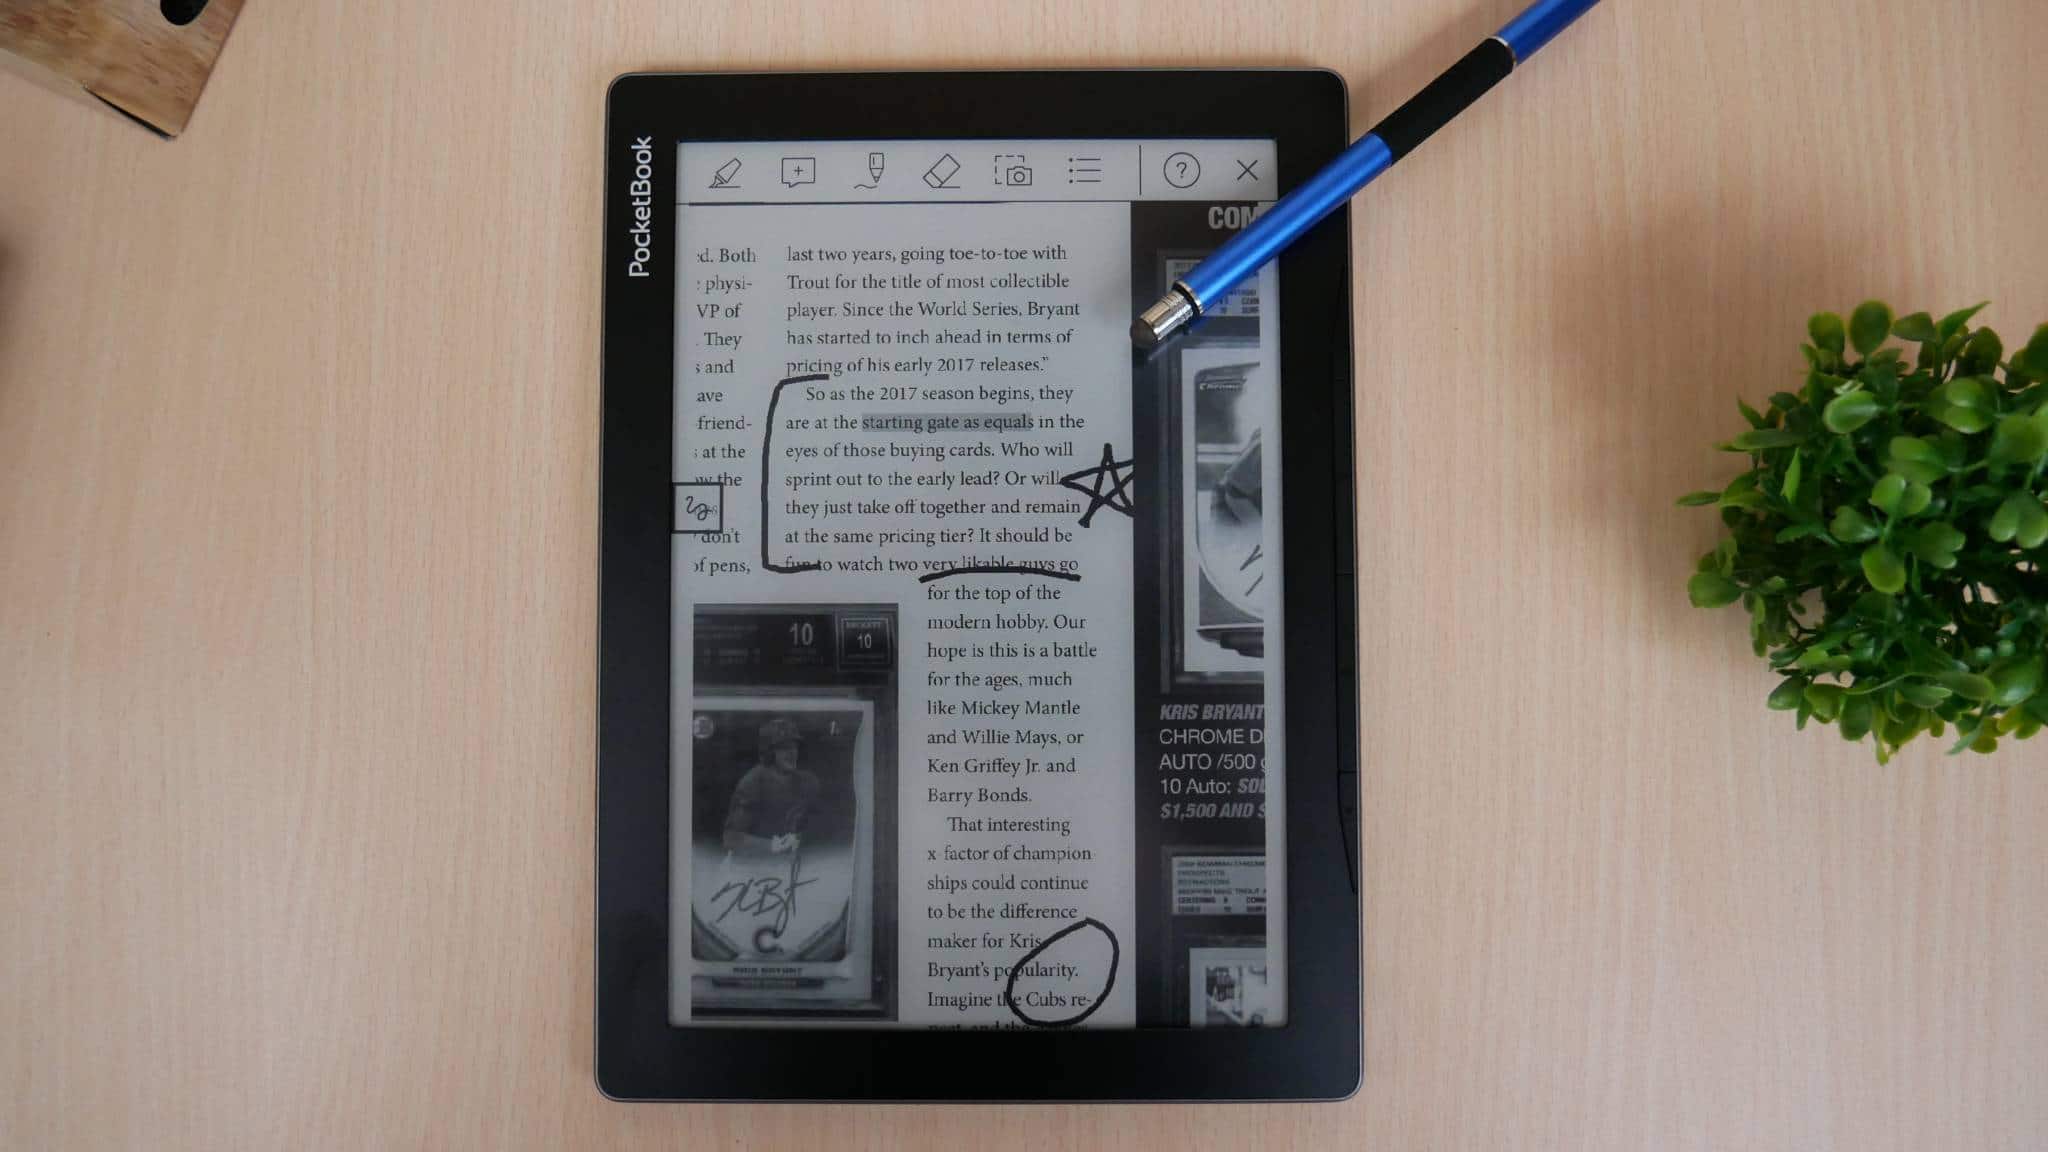 PocketBook InkPad Lite, E-Book Reader, Mist Grey